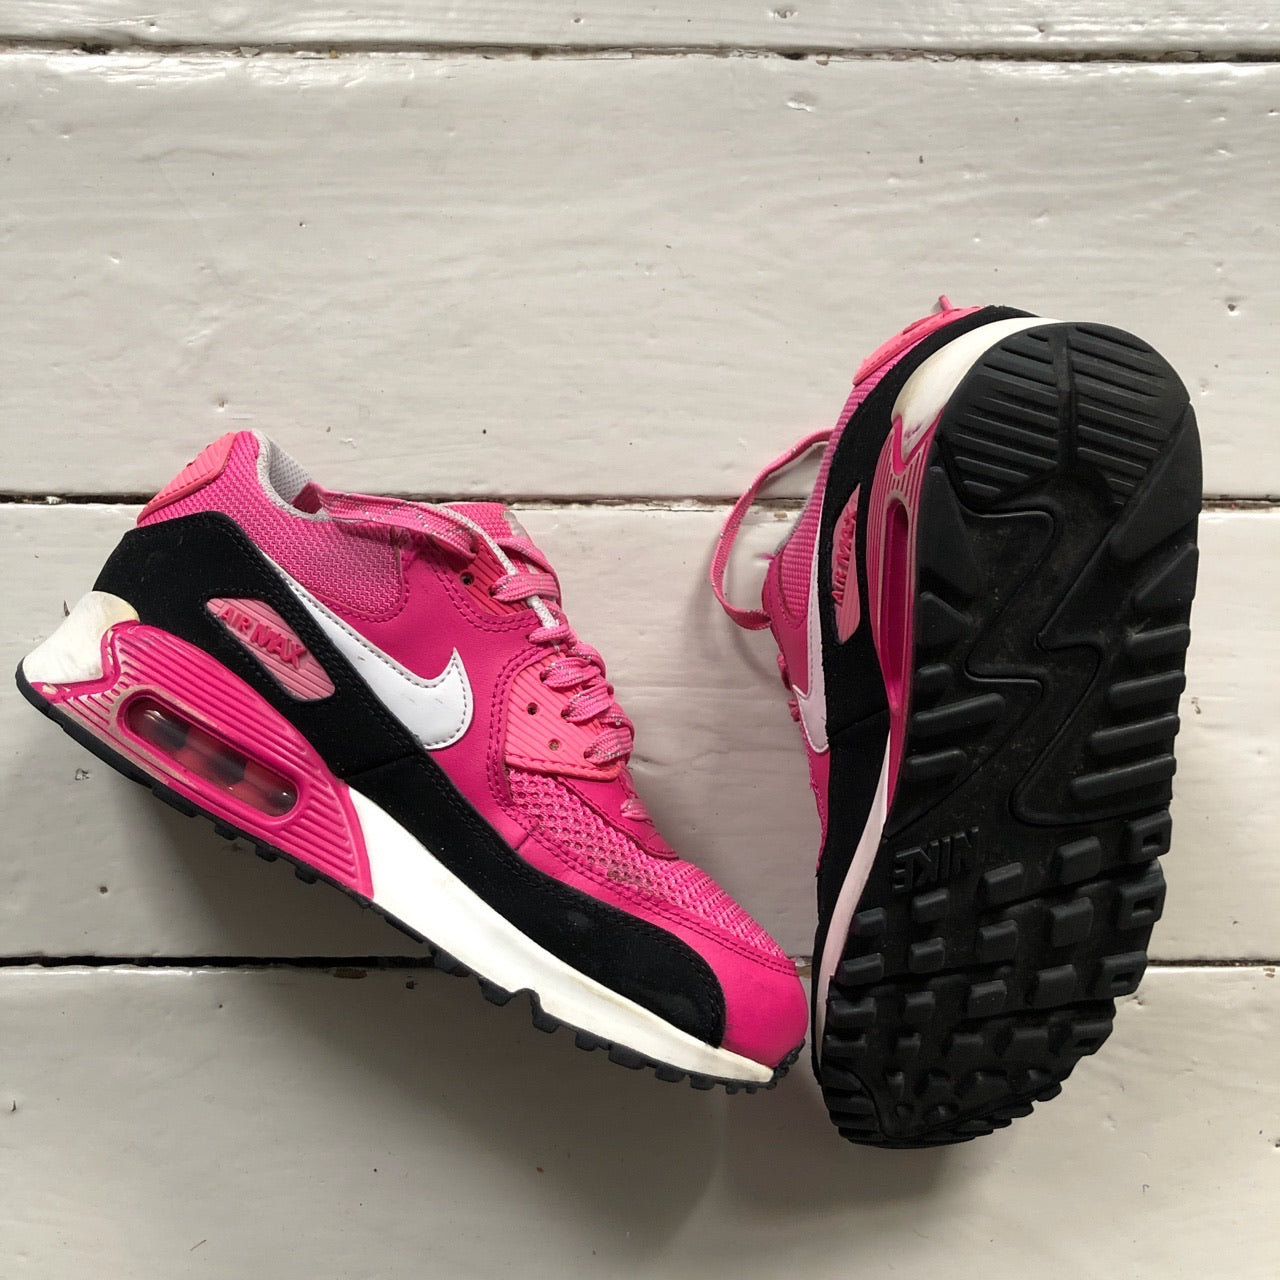 Nike Air Max 90 Hot Pink Black and White (UK 5)